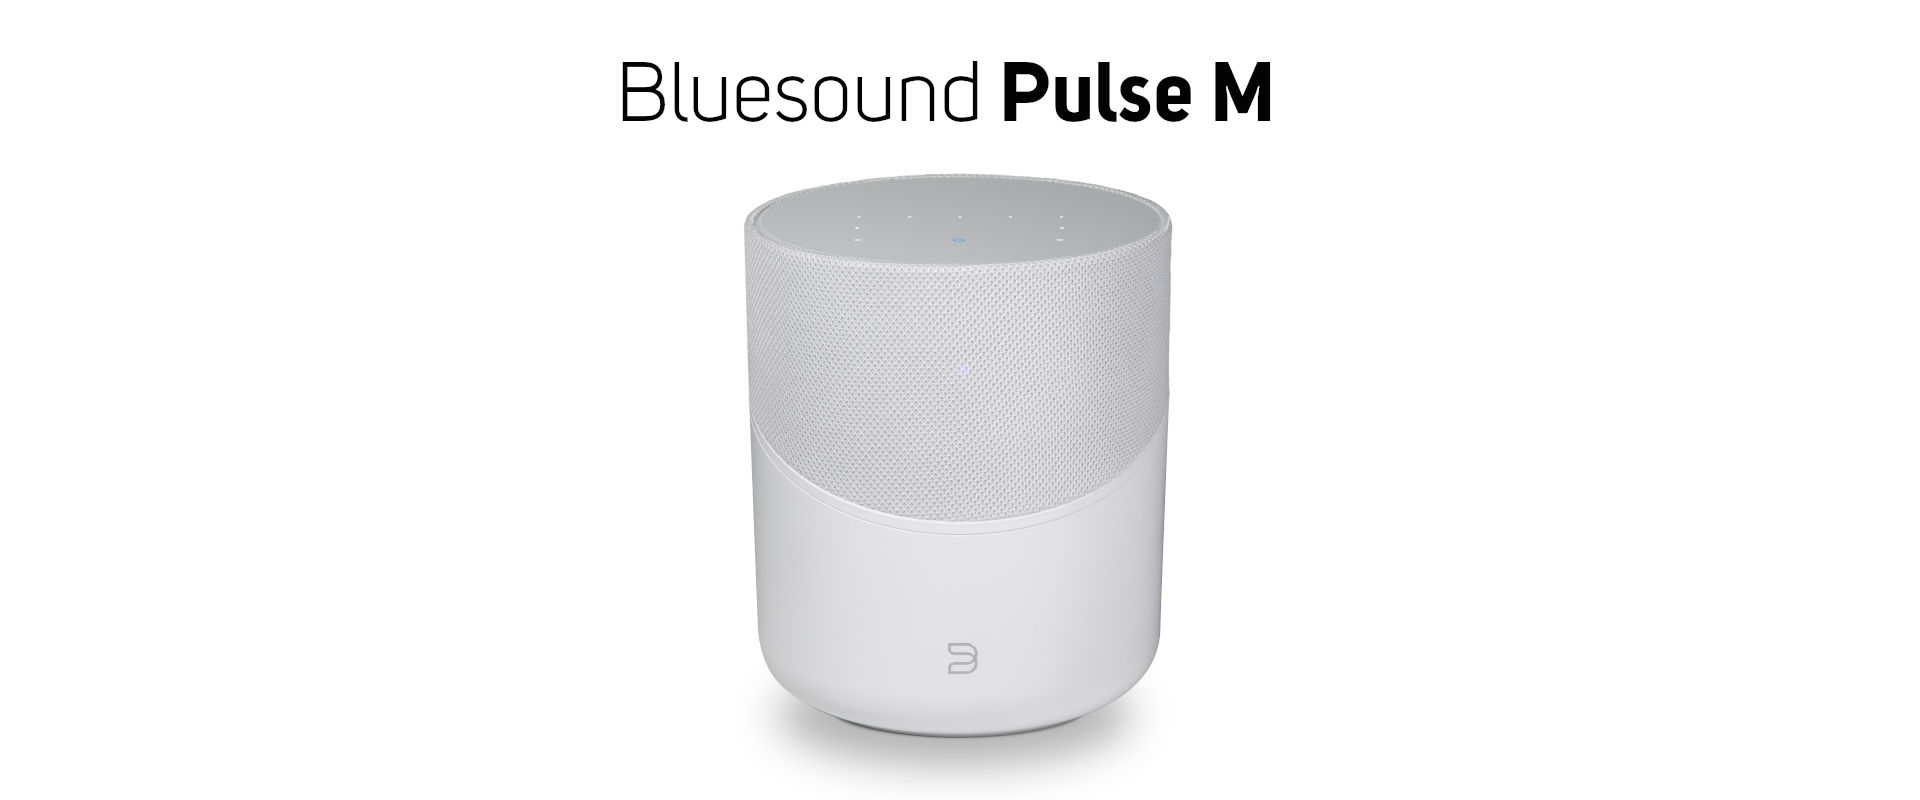 blue sound pulse m